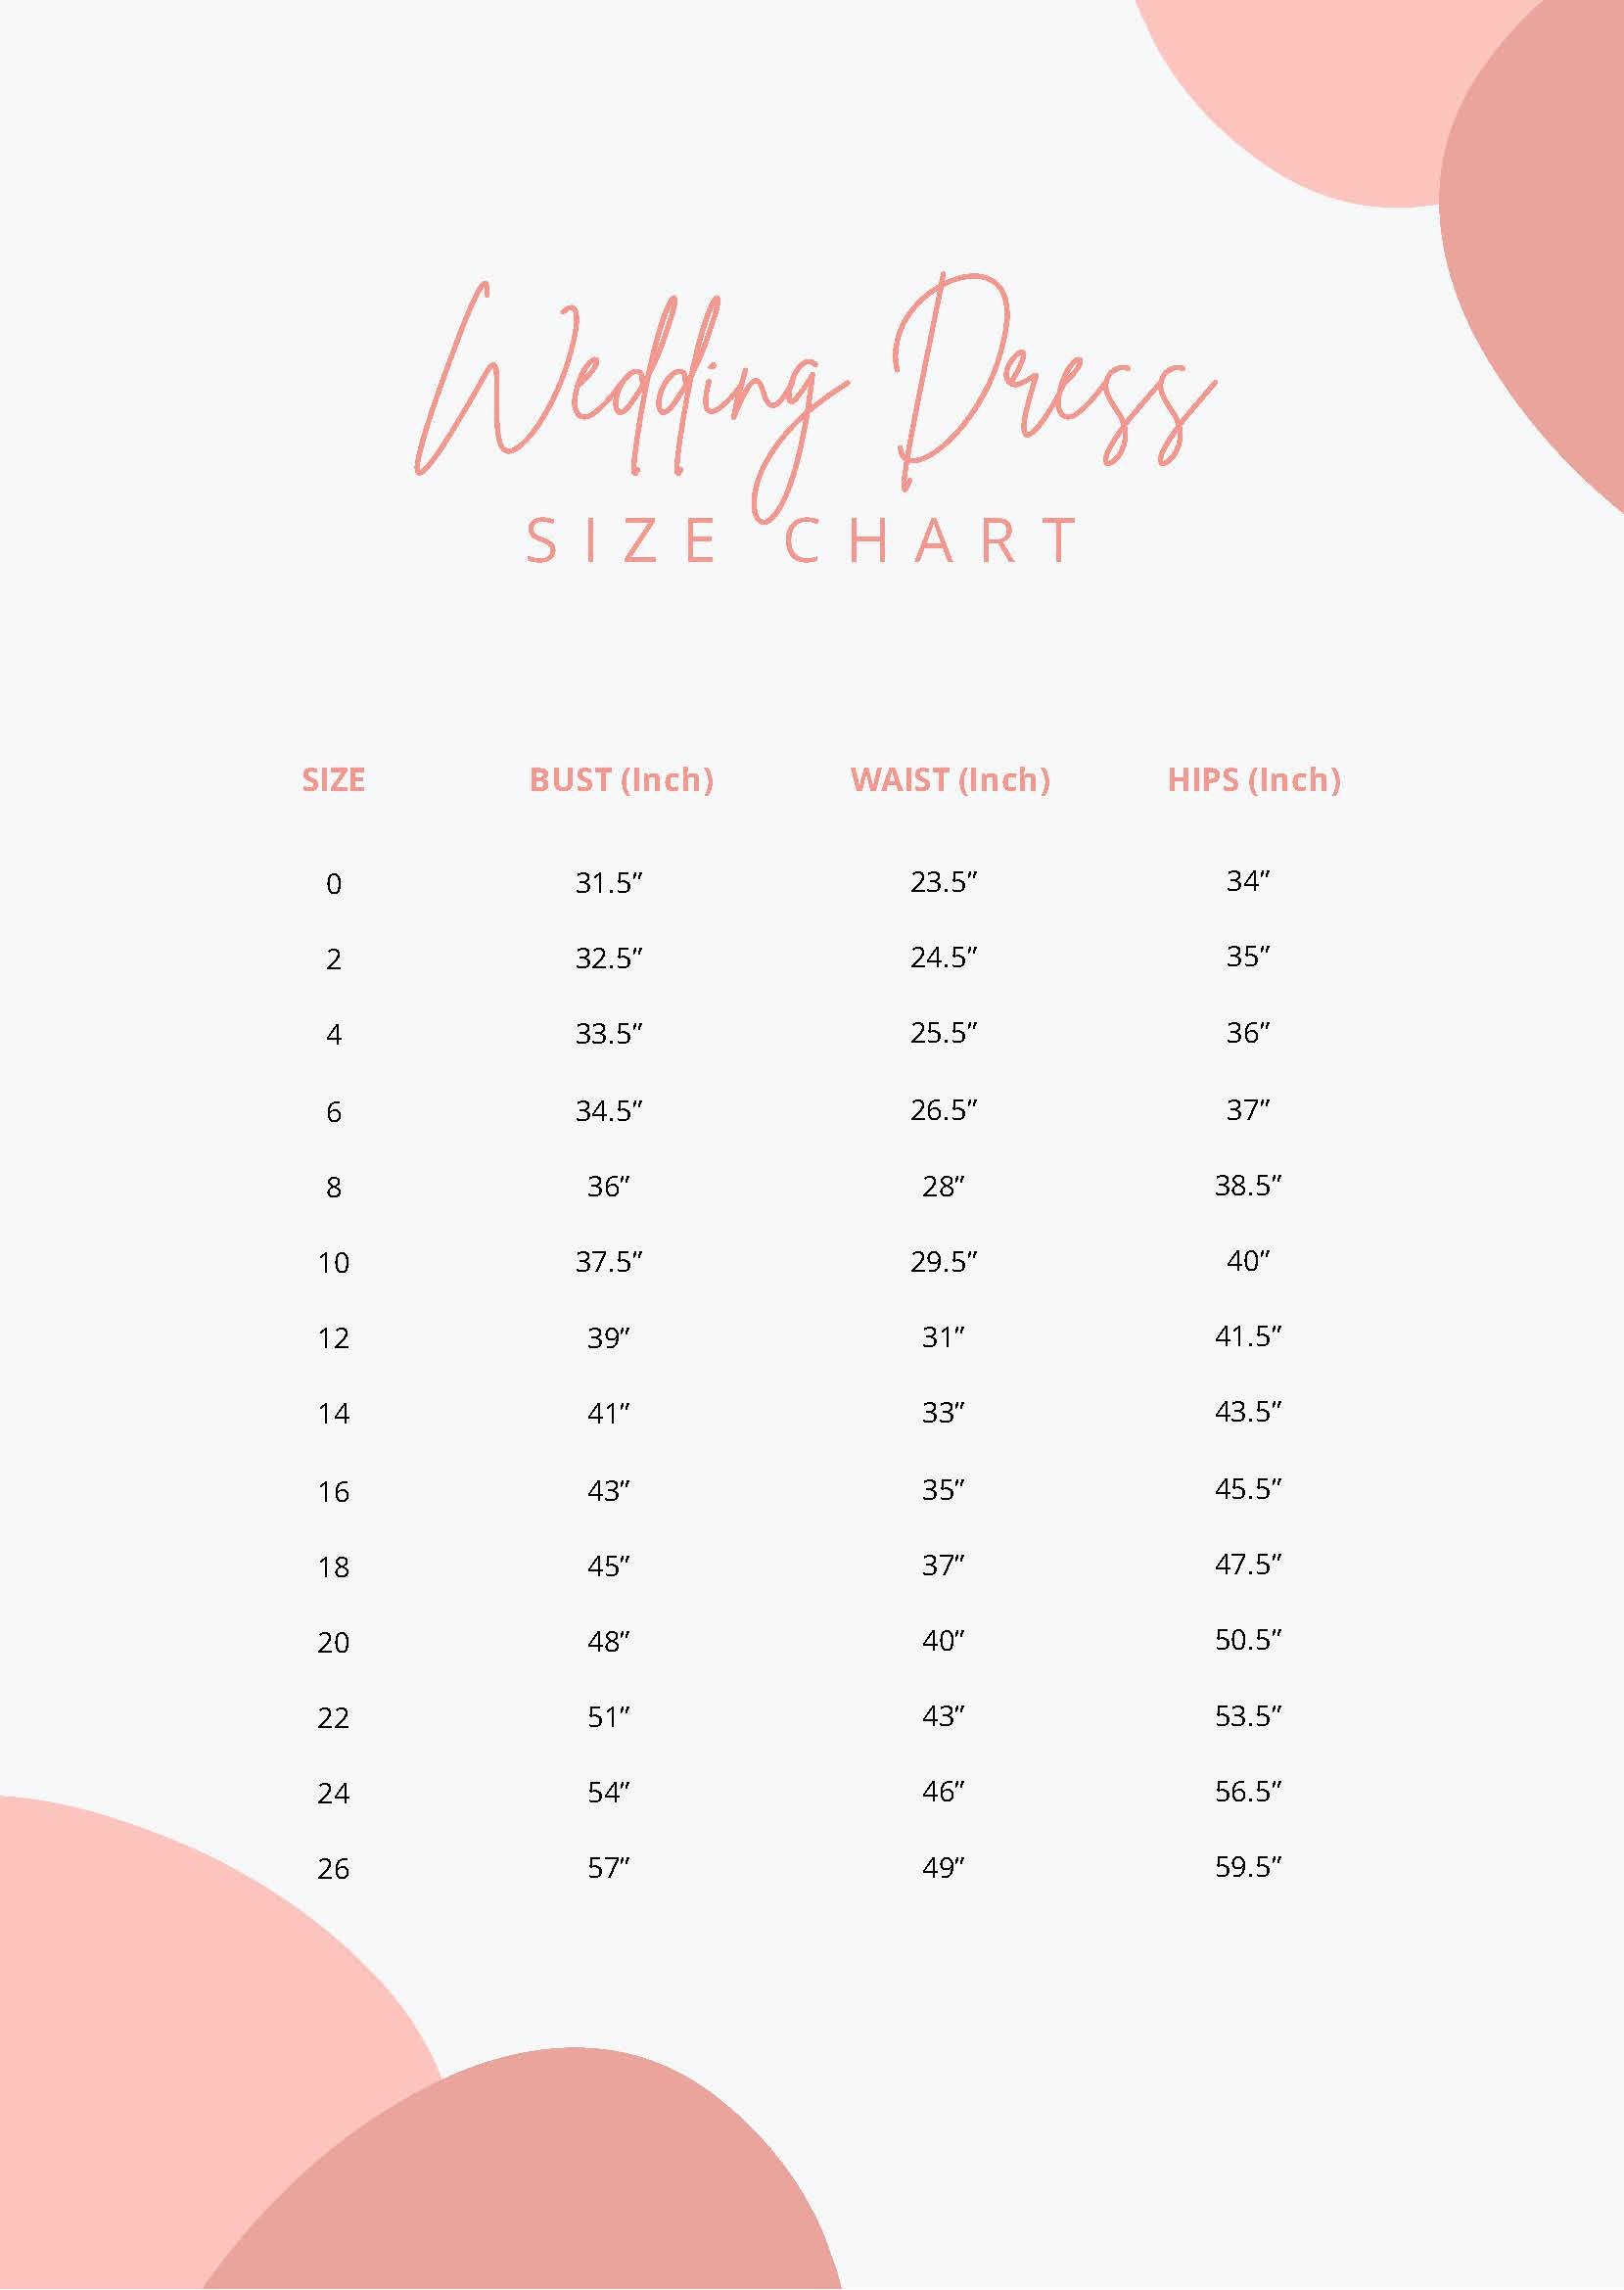 Free Wedding Dress Size Chart - Download in PDF | Template.net